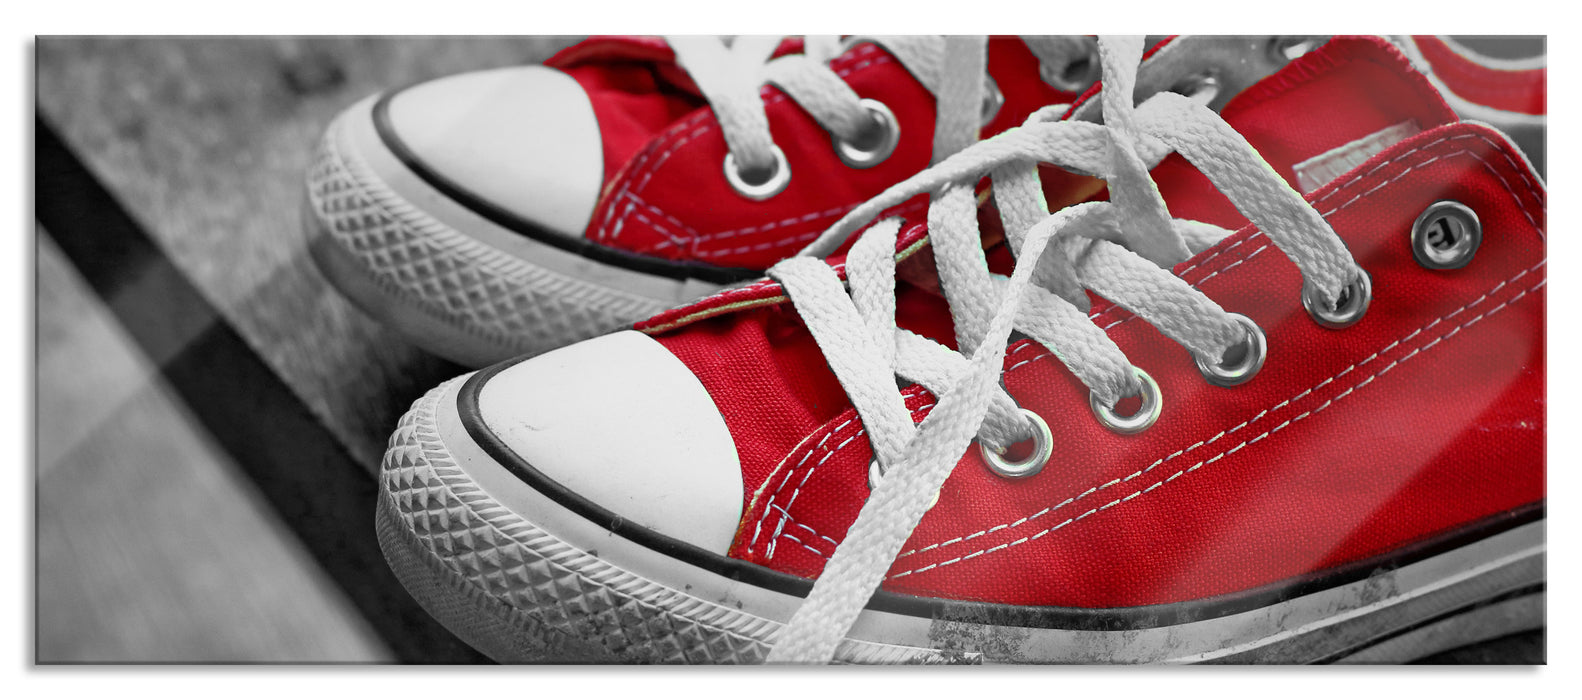 Coole Rote Schuhe, Glasbild Panorama